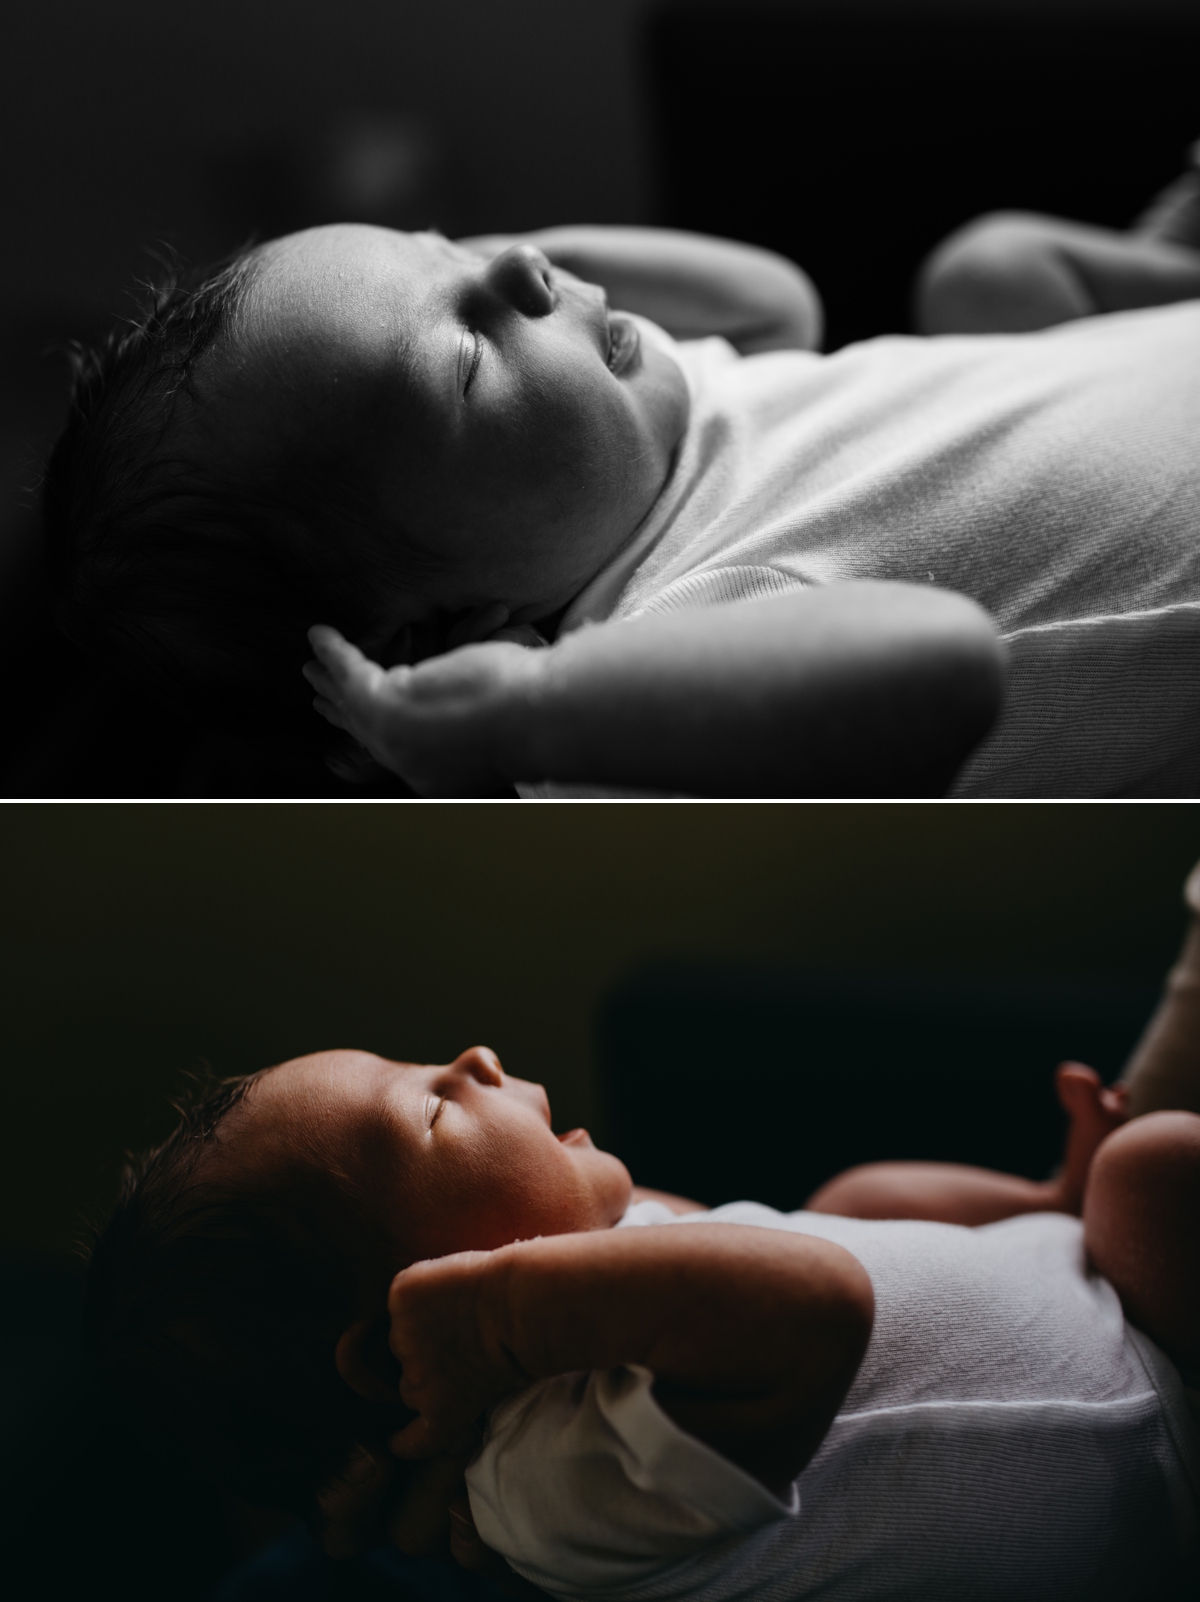 Seattle Unposed Newborn Photographer